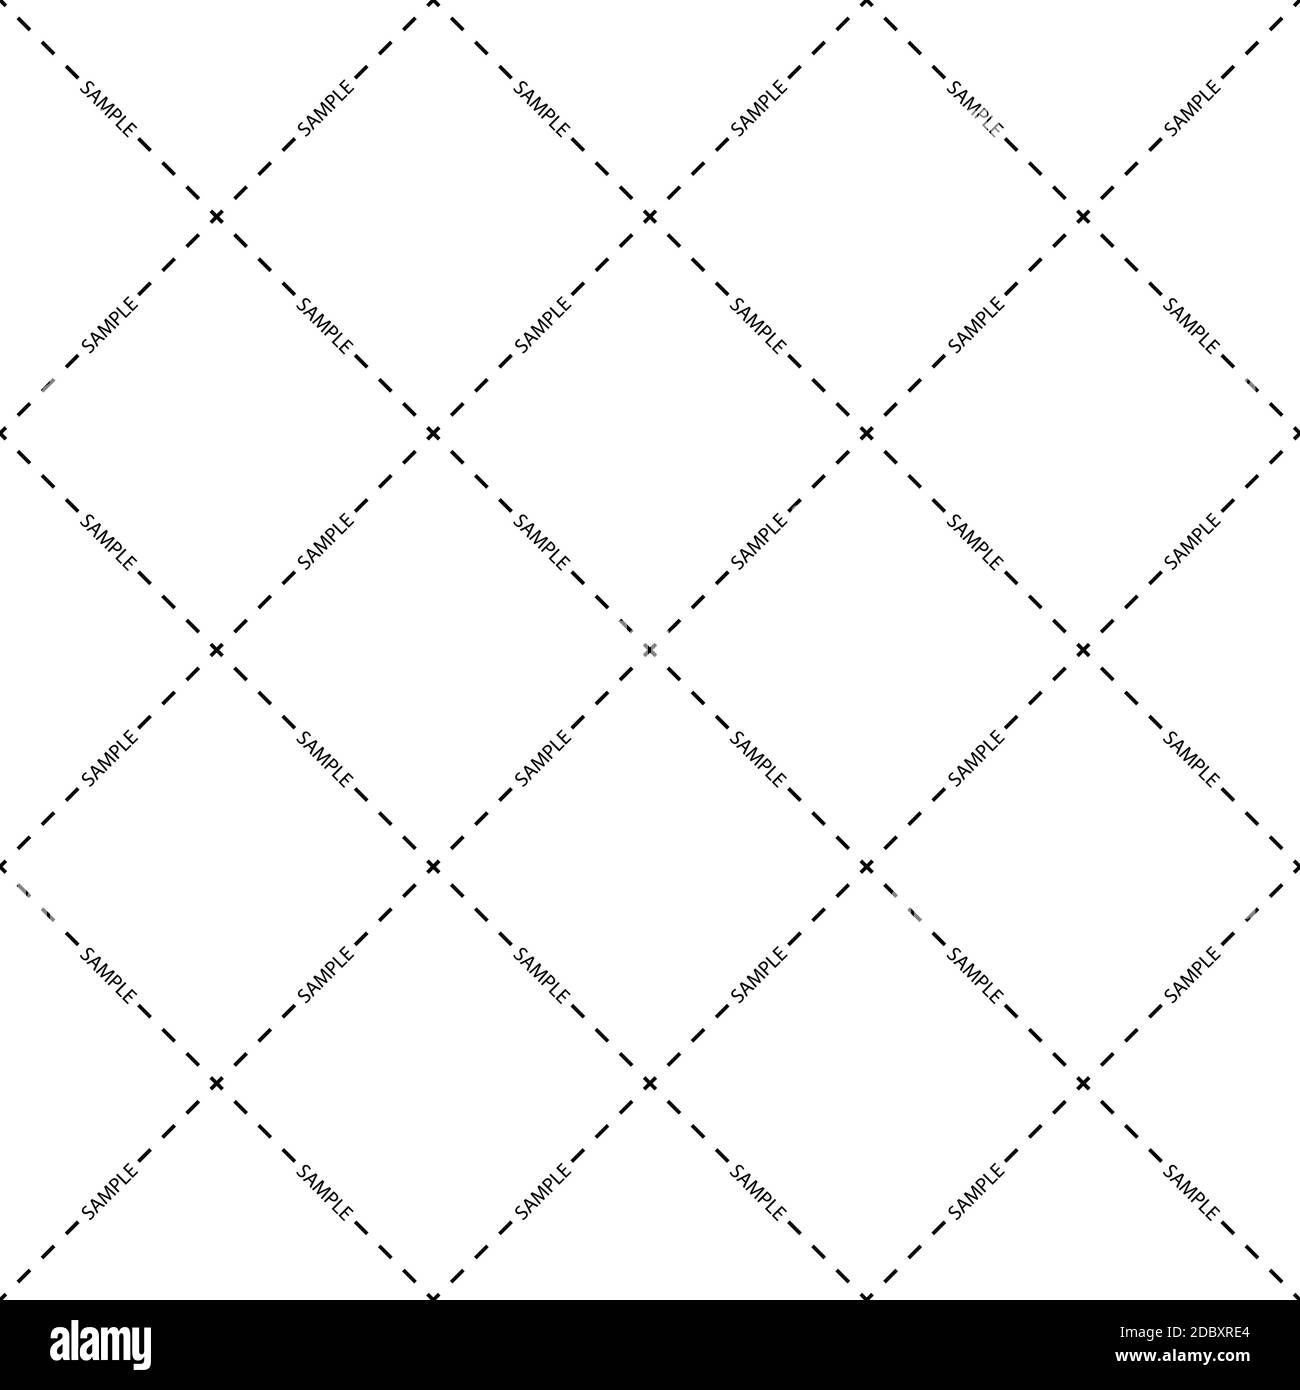 Sample watermark seamless pattern. Vector illustration Stock Vector